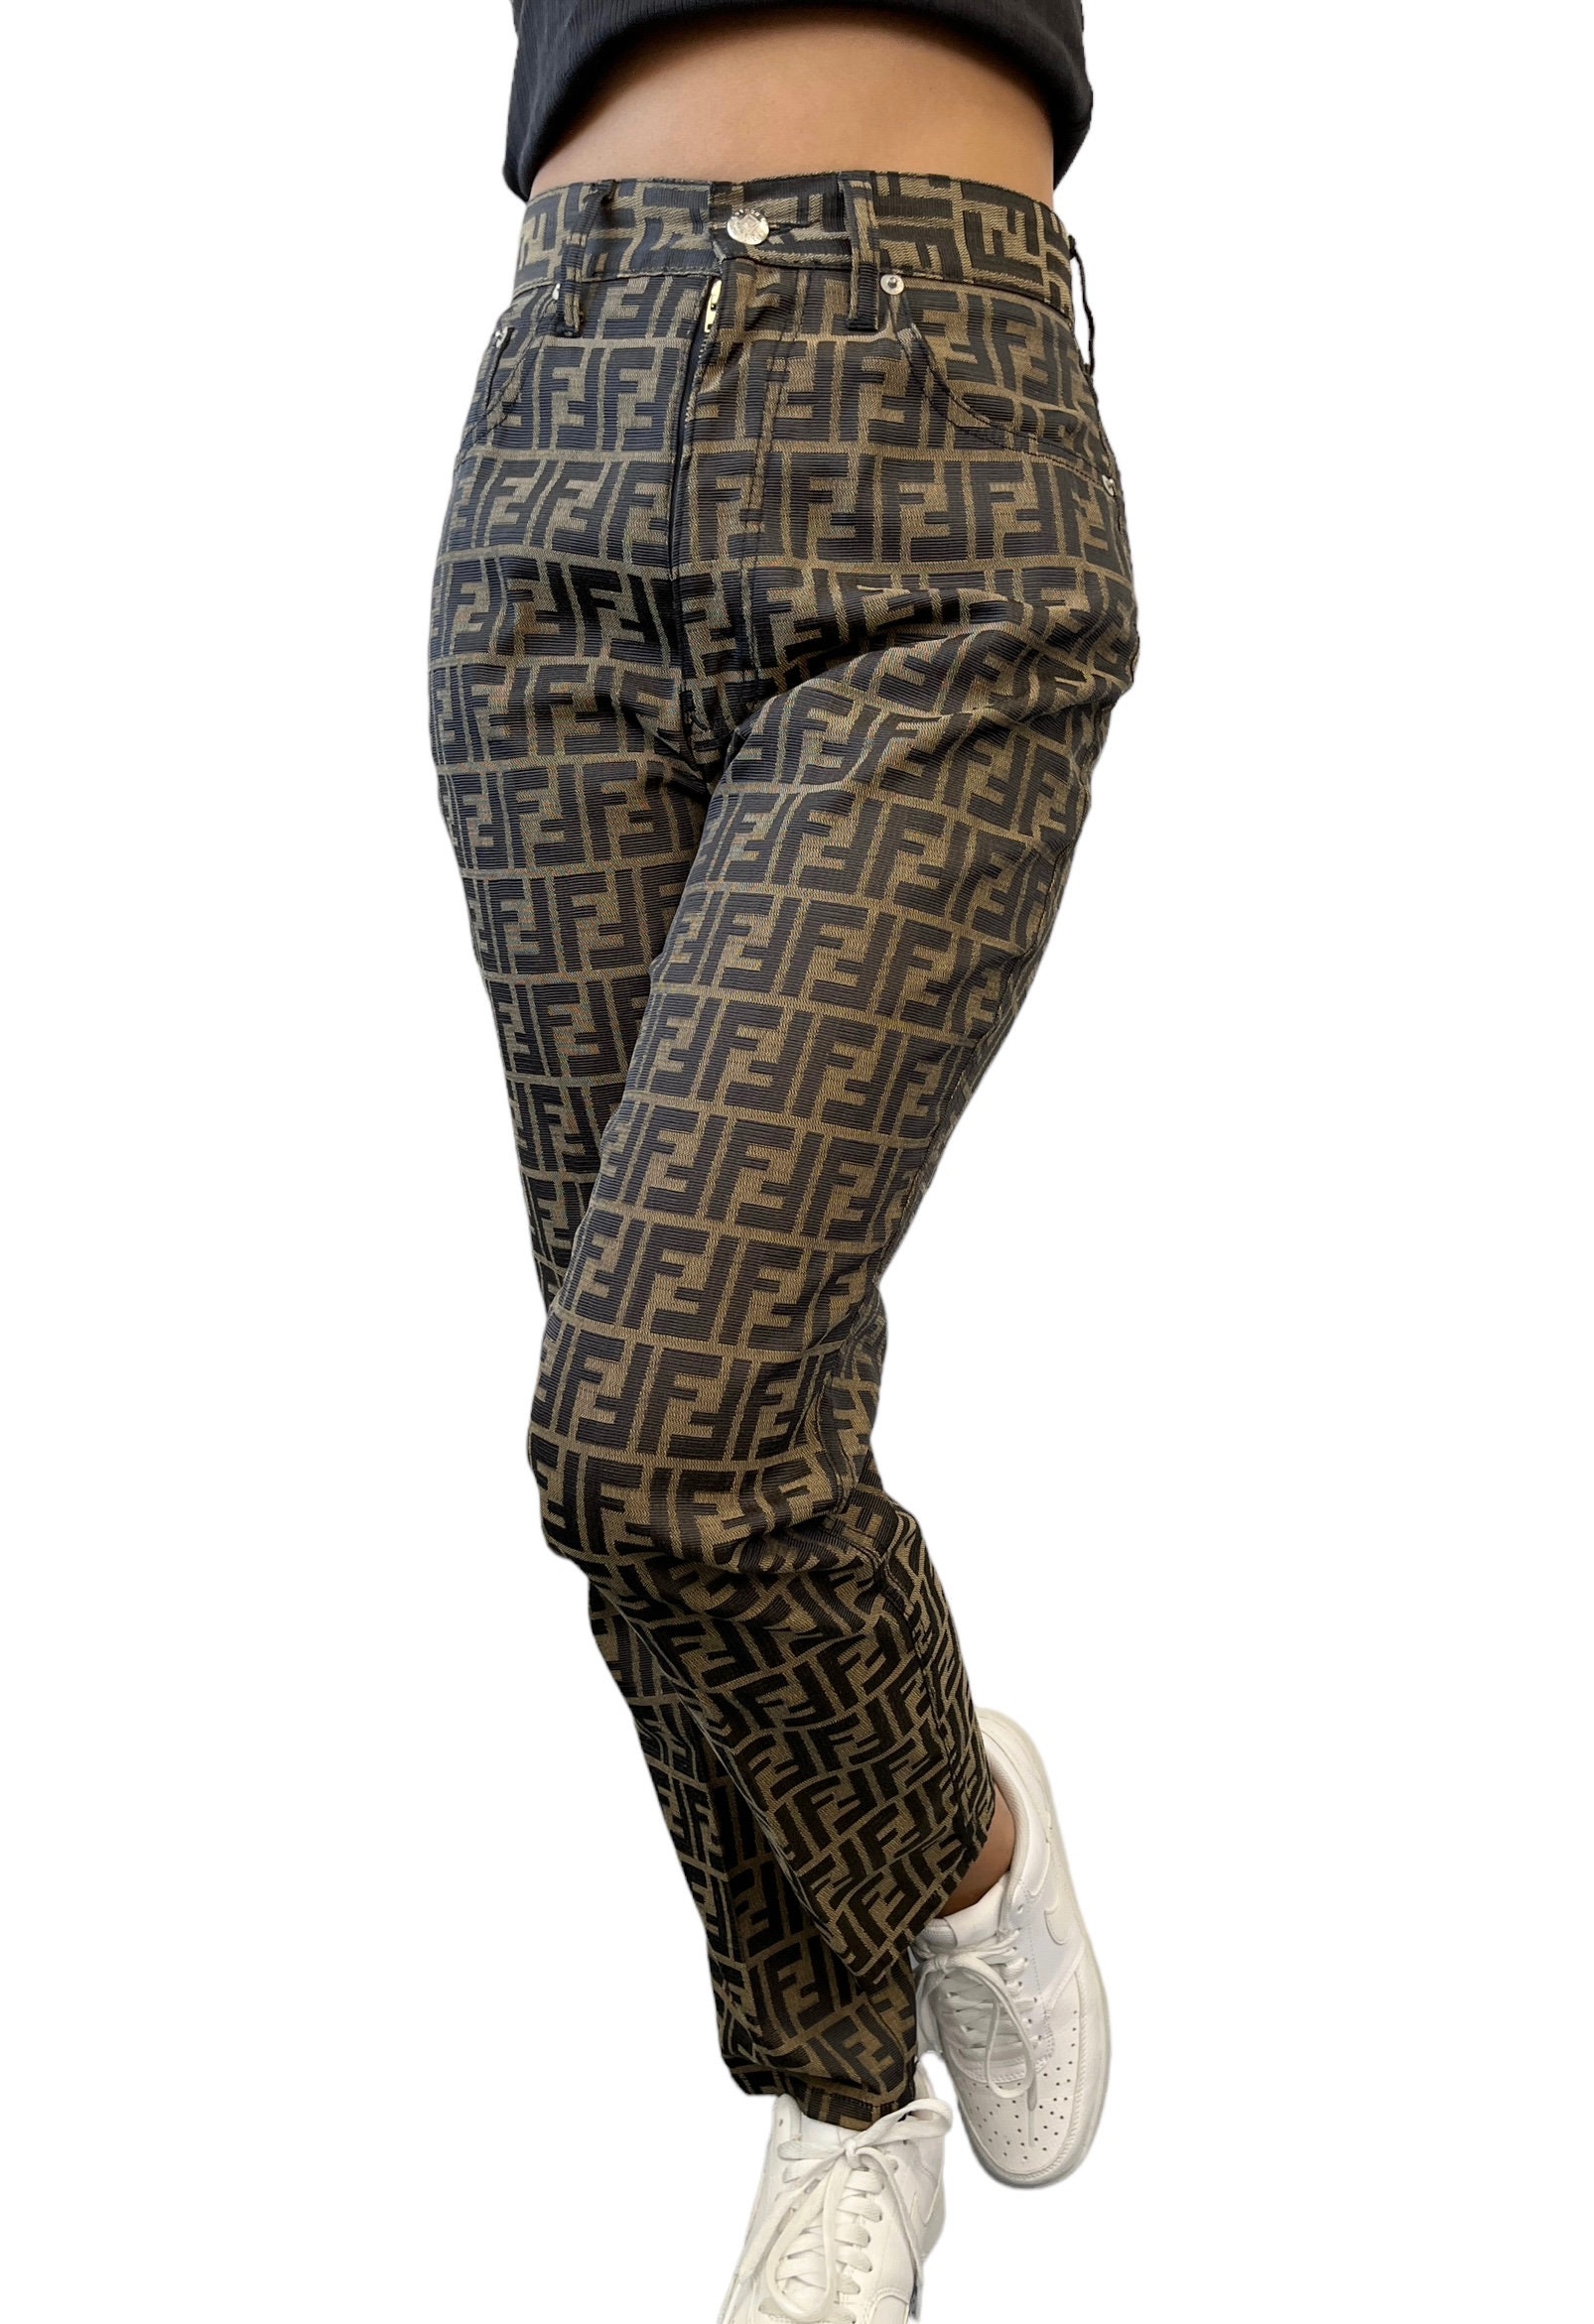 Gucci Intarsia Tights - Brown  Patterned tights, Gucci pattern